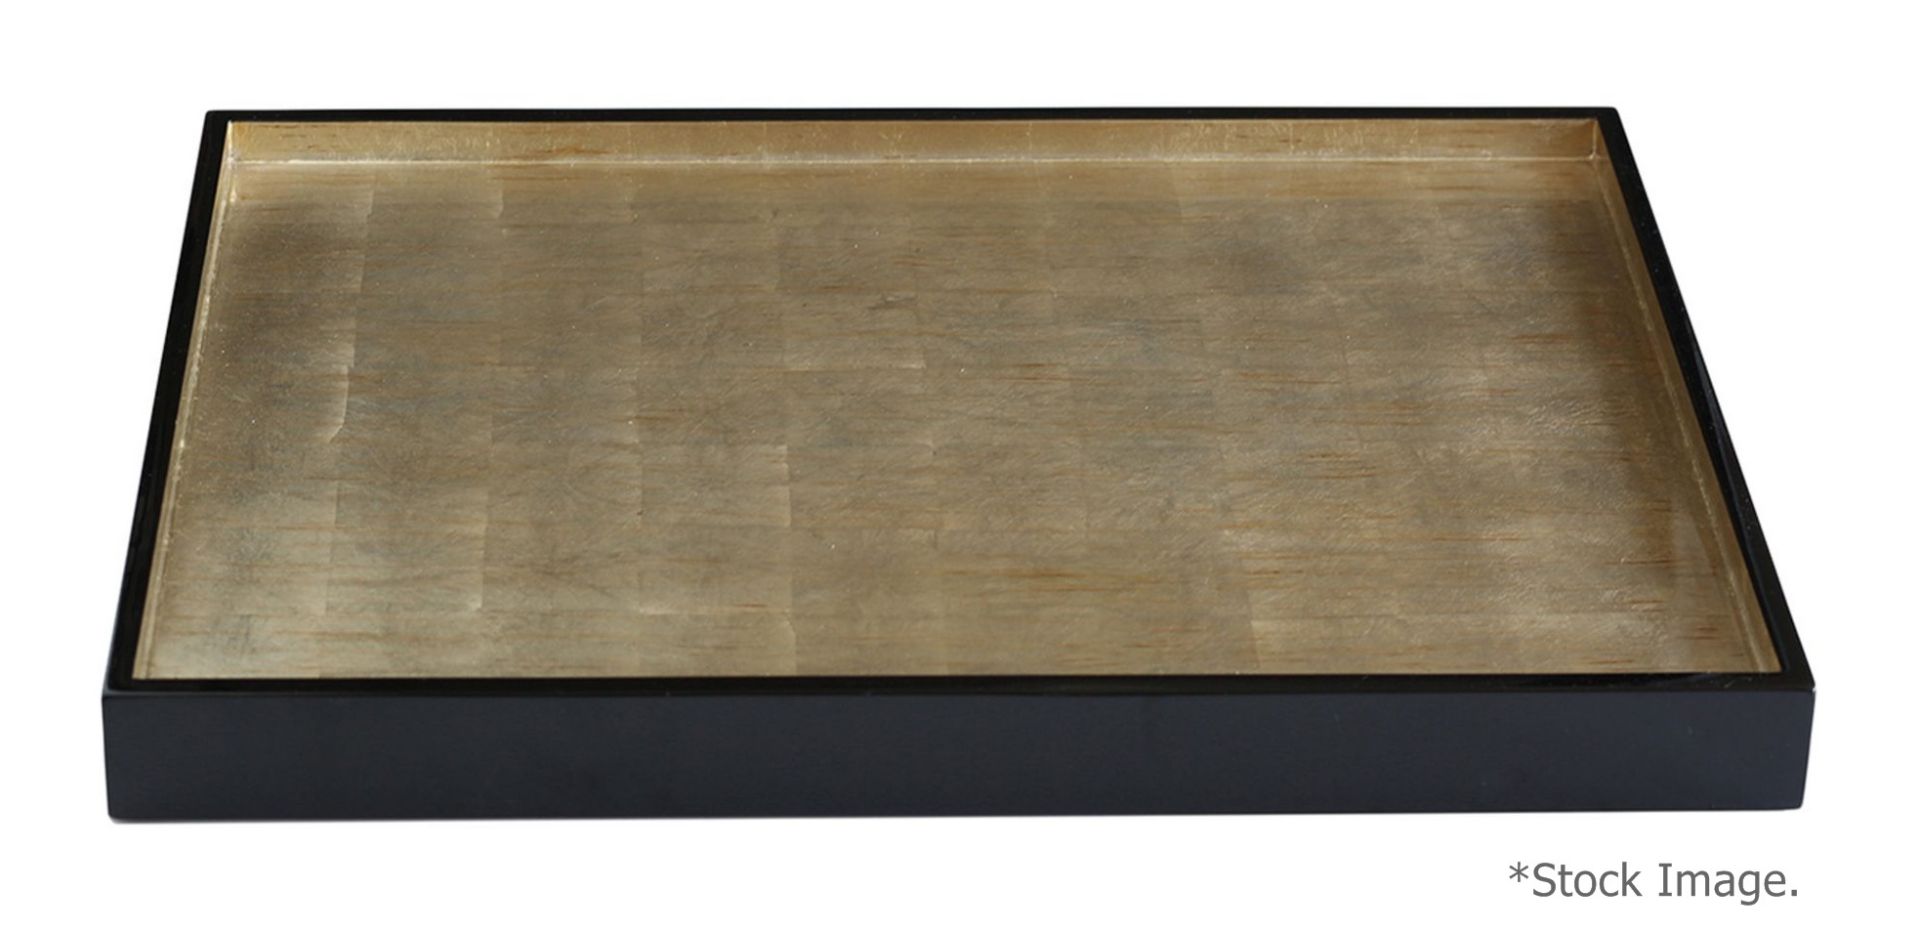 1 x POSH TRADING COMPANY Large Silver Leaf Windsor Tray (52cm x 36cm) - Original Price £160.00 - Image 2 of 9